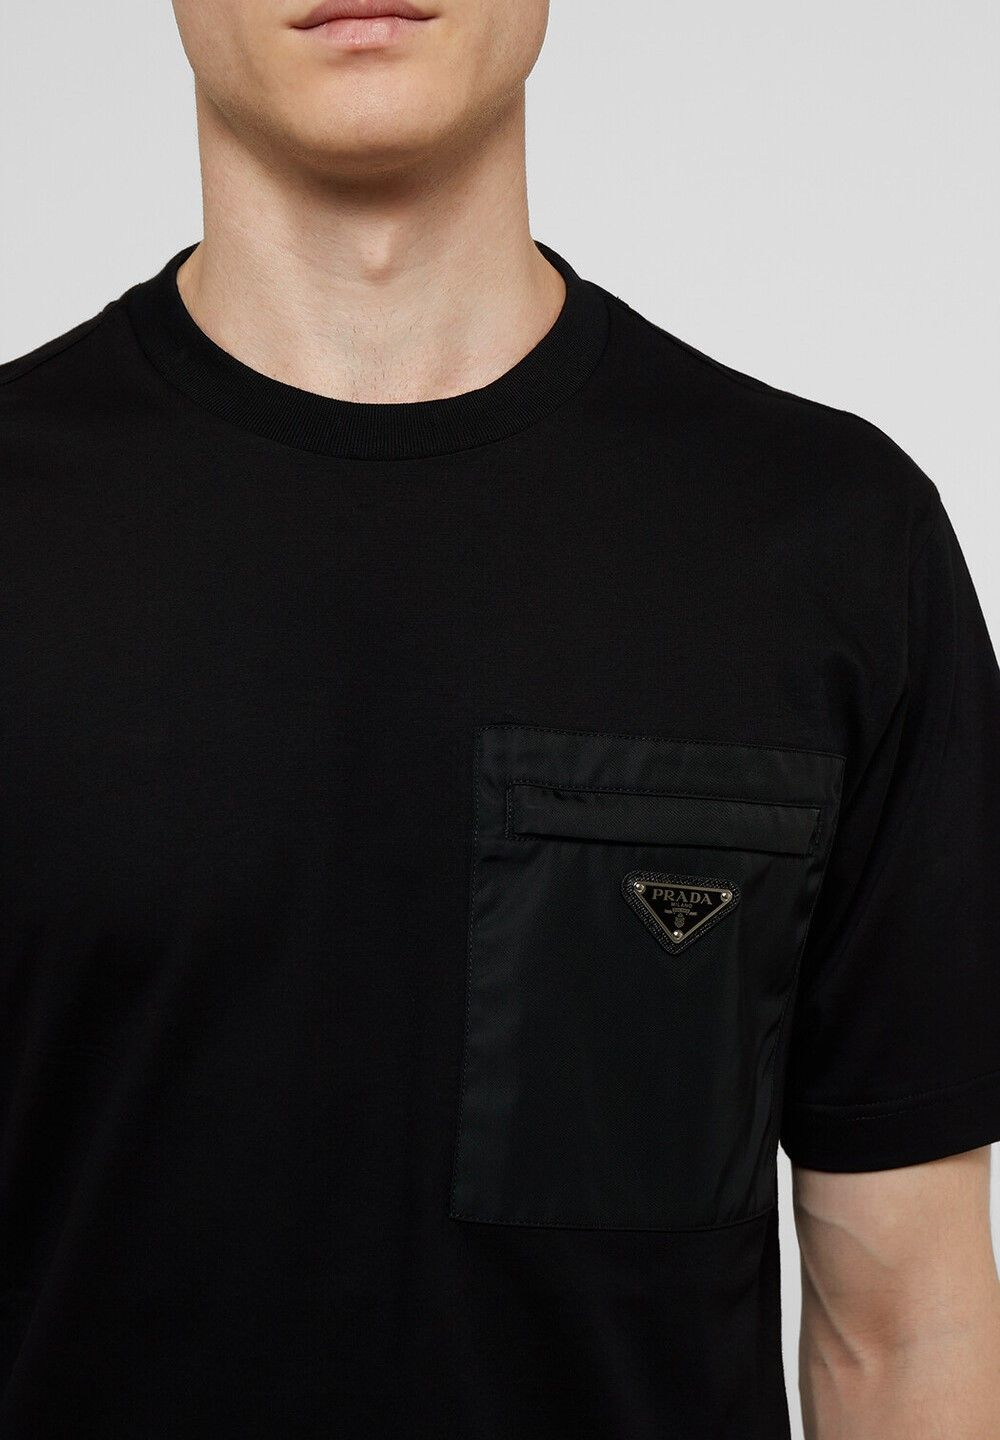 Prada Nylon Pocket T Shirt Black